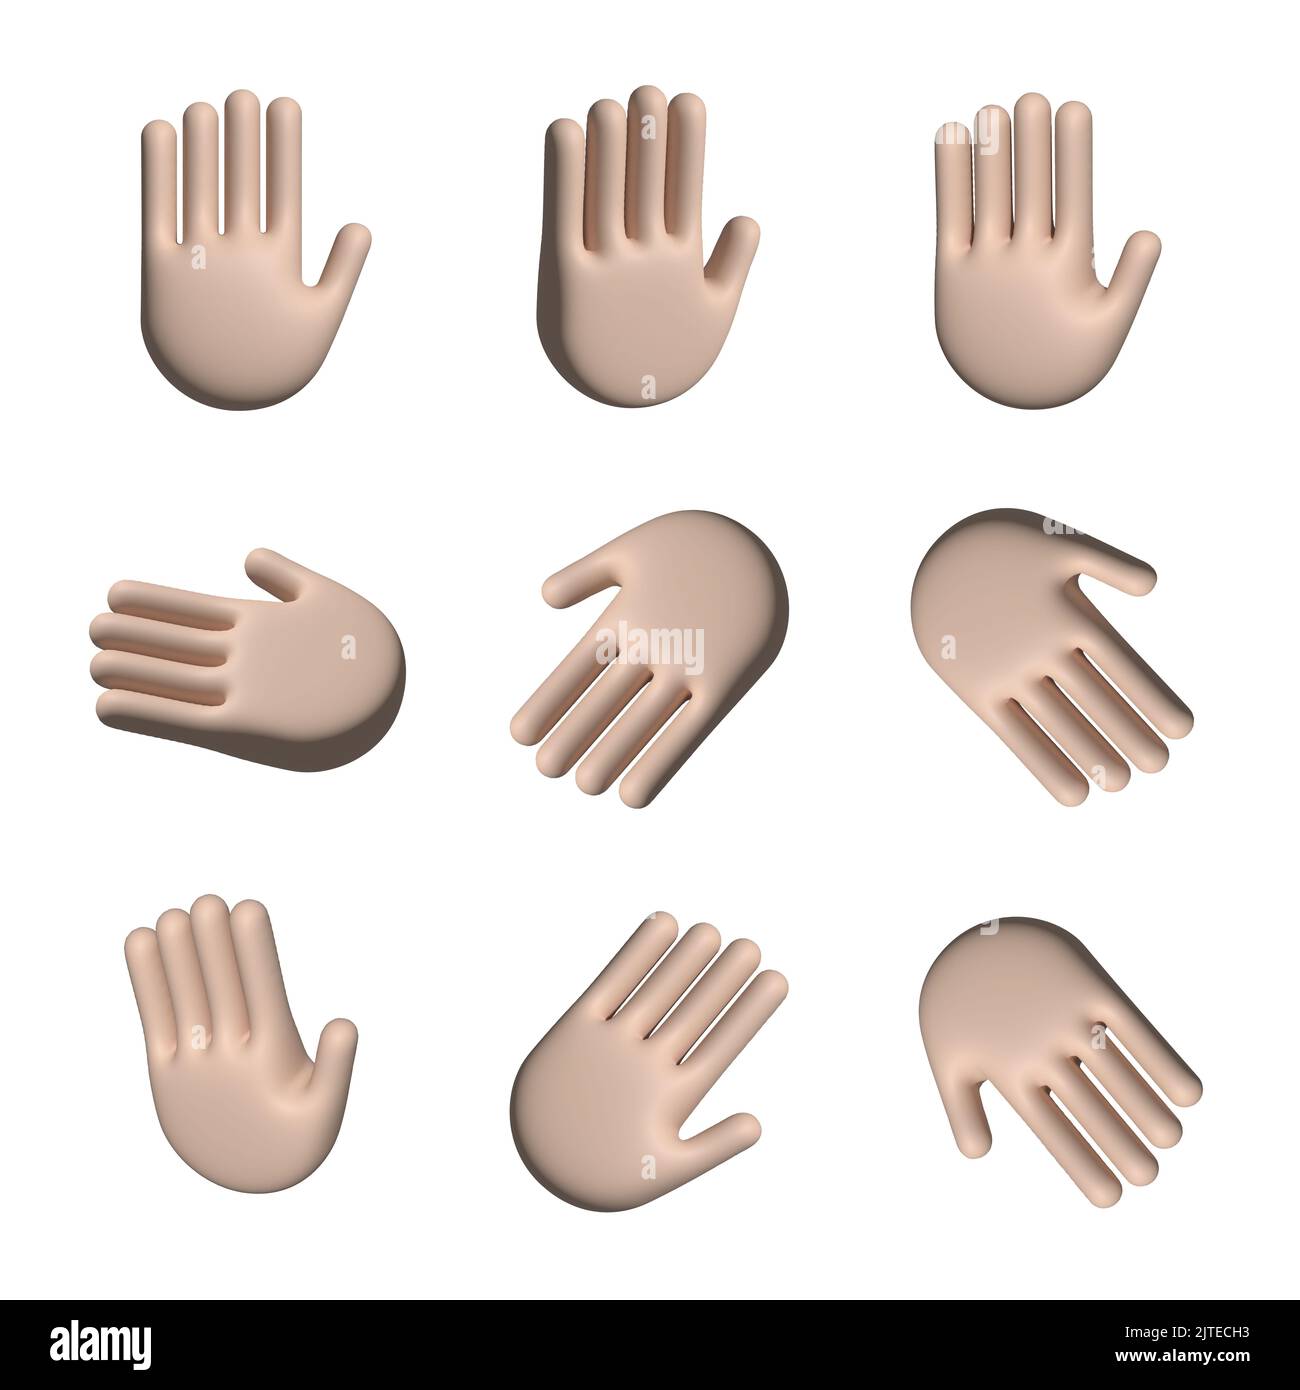 Light skin hands 3D rendering Stock Photo